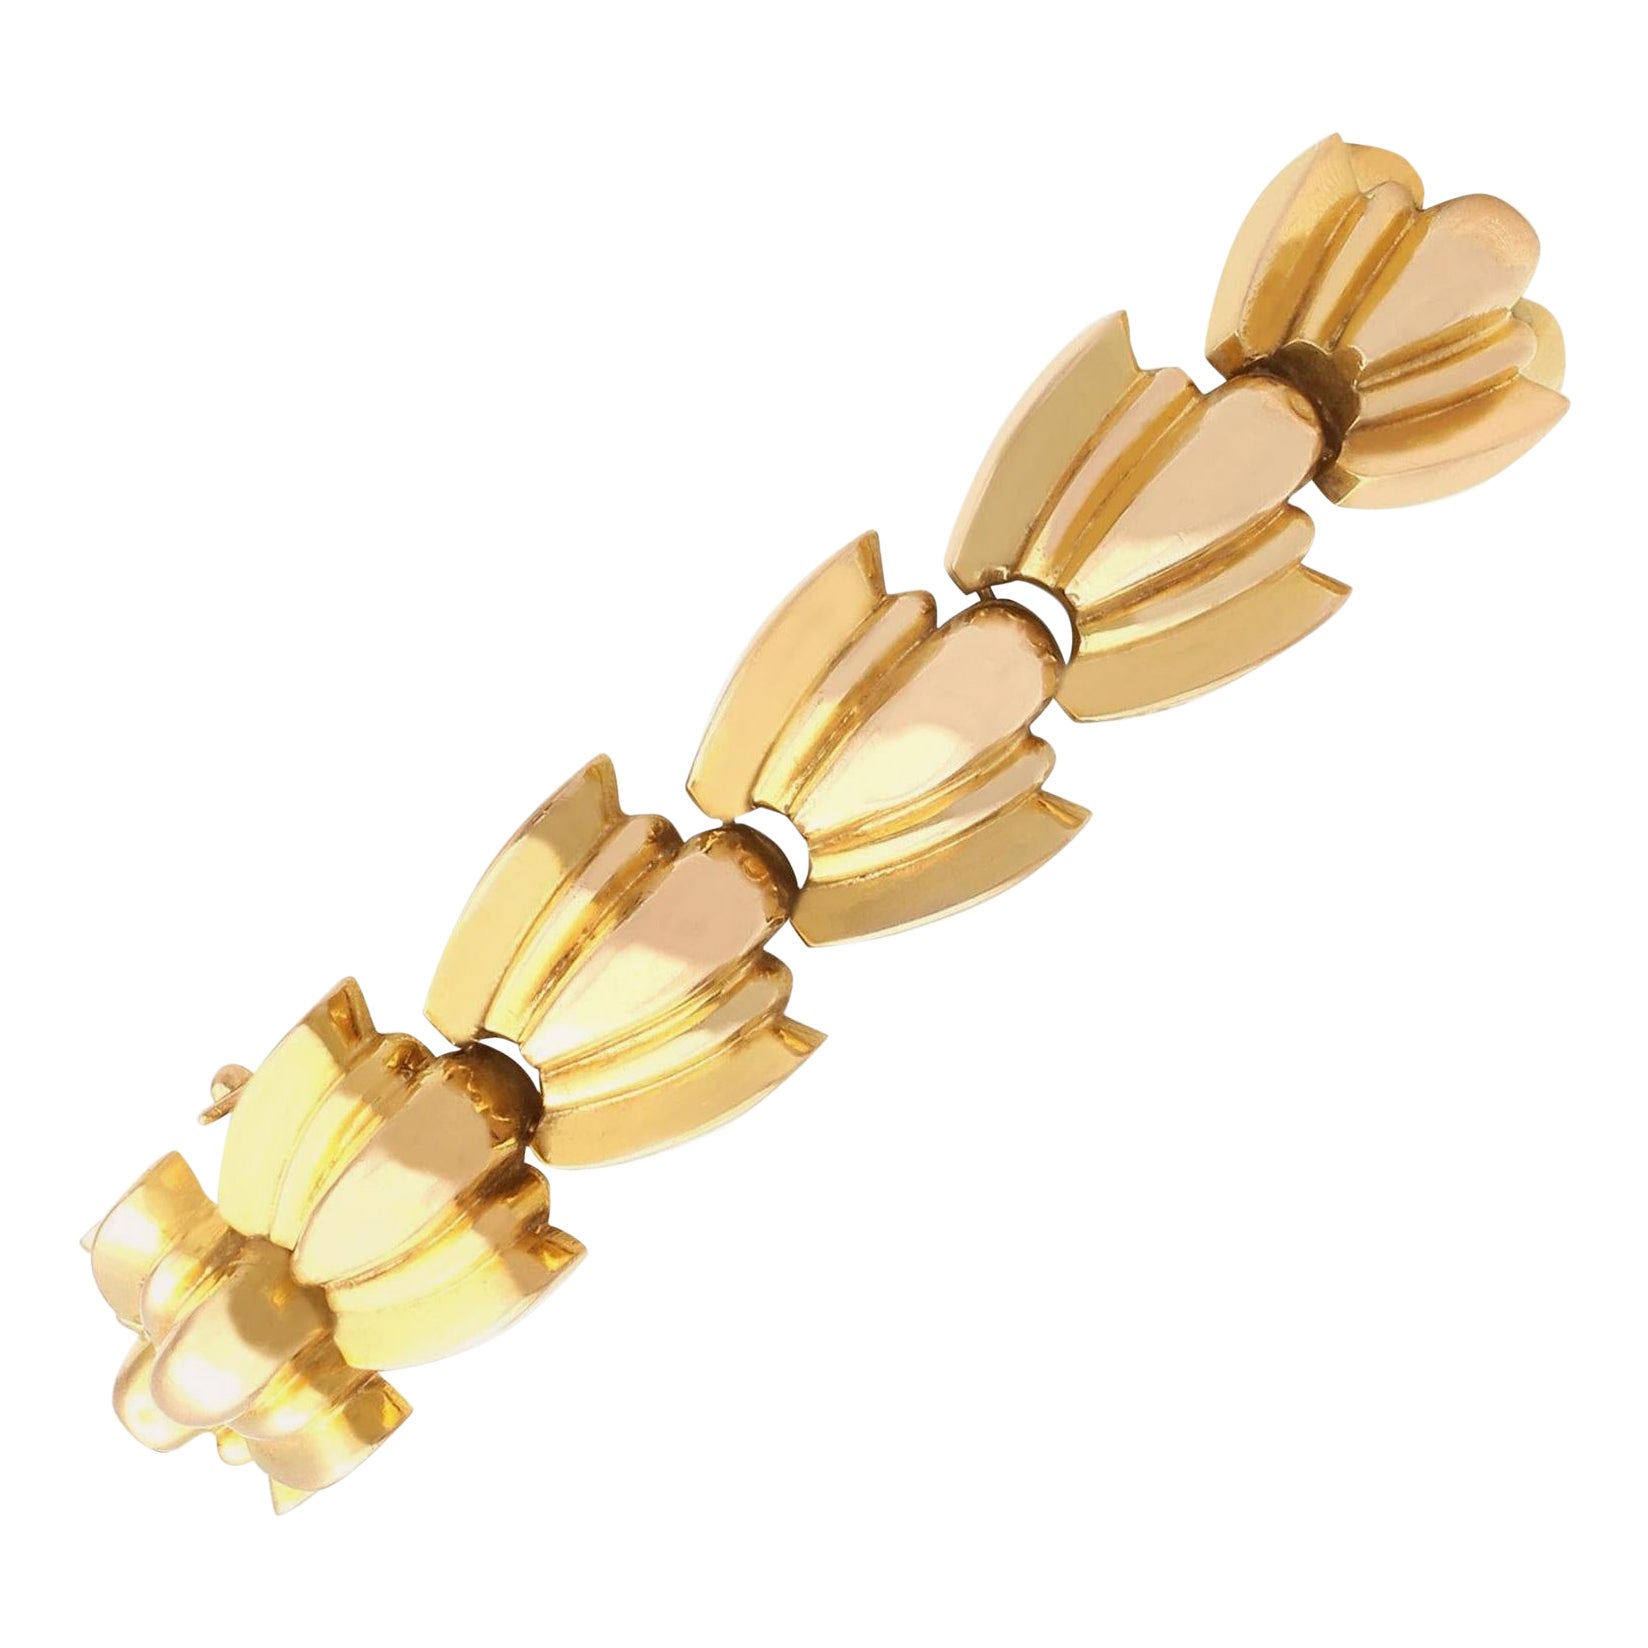 Vintage French Art Deco 1940s Yellow Gold Bracelet